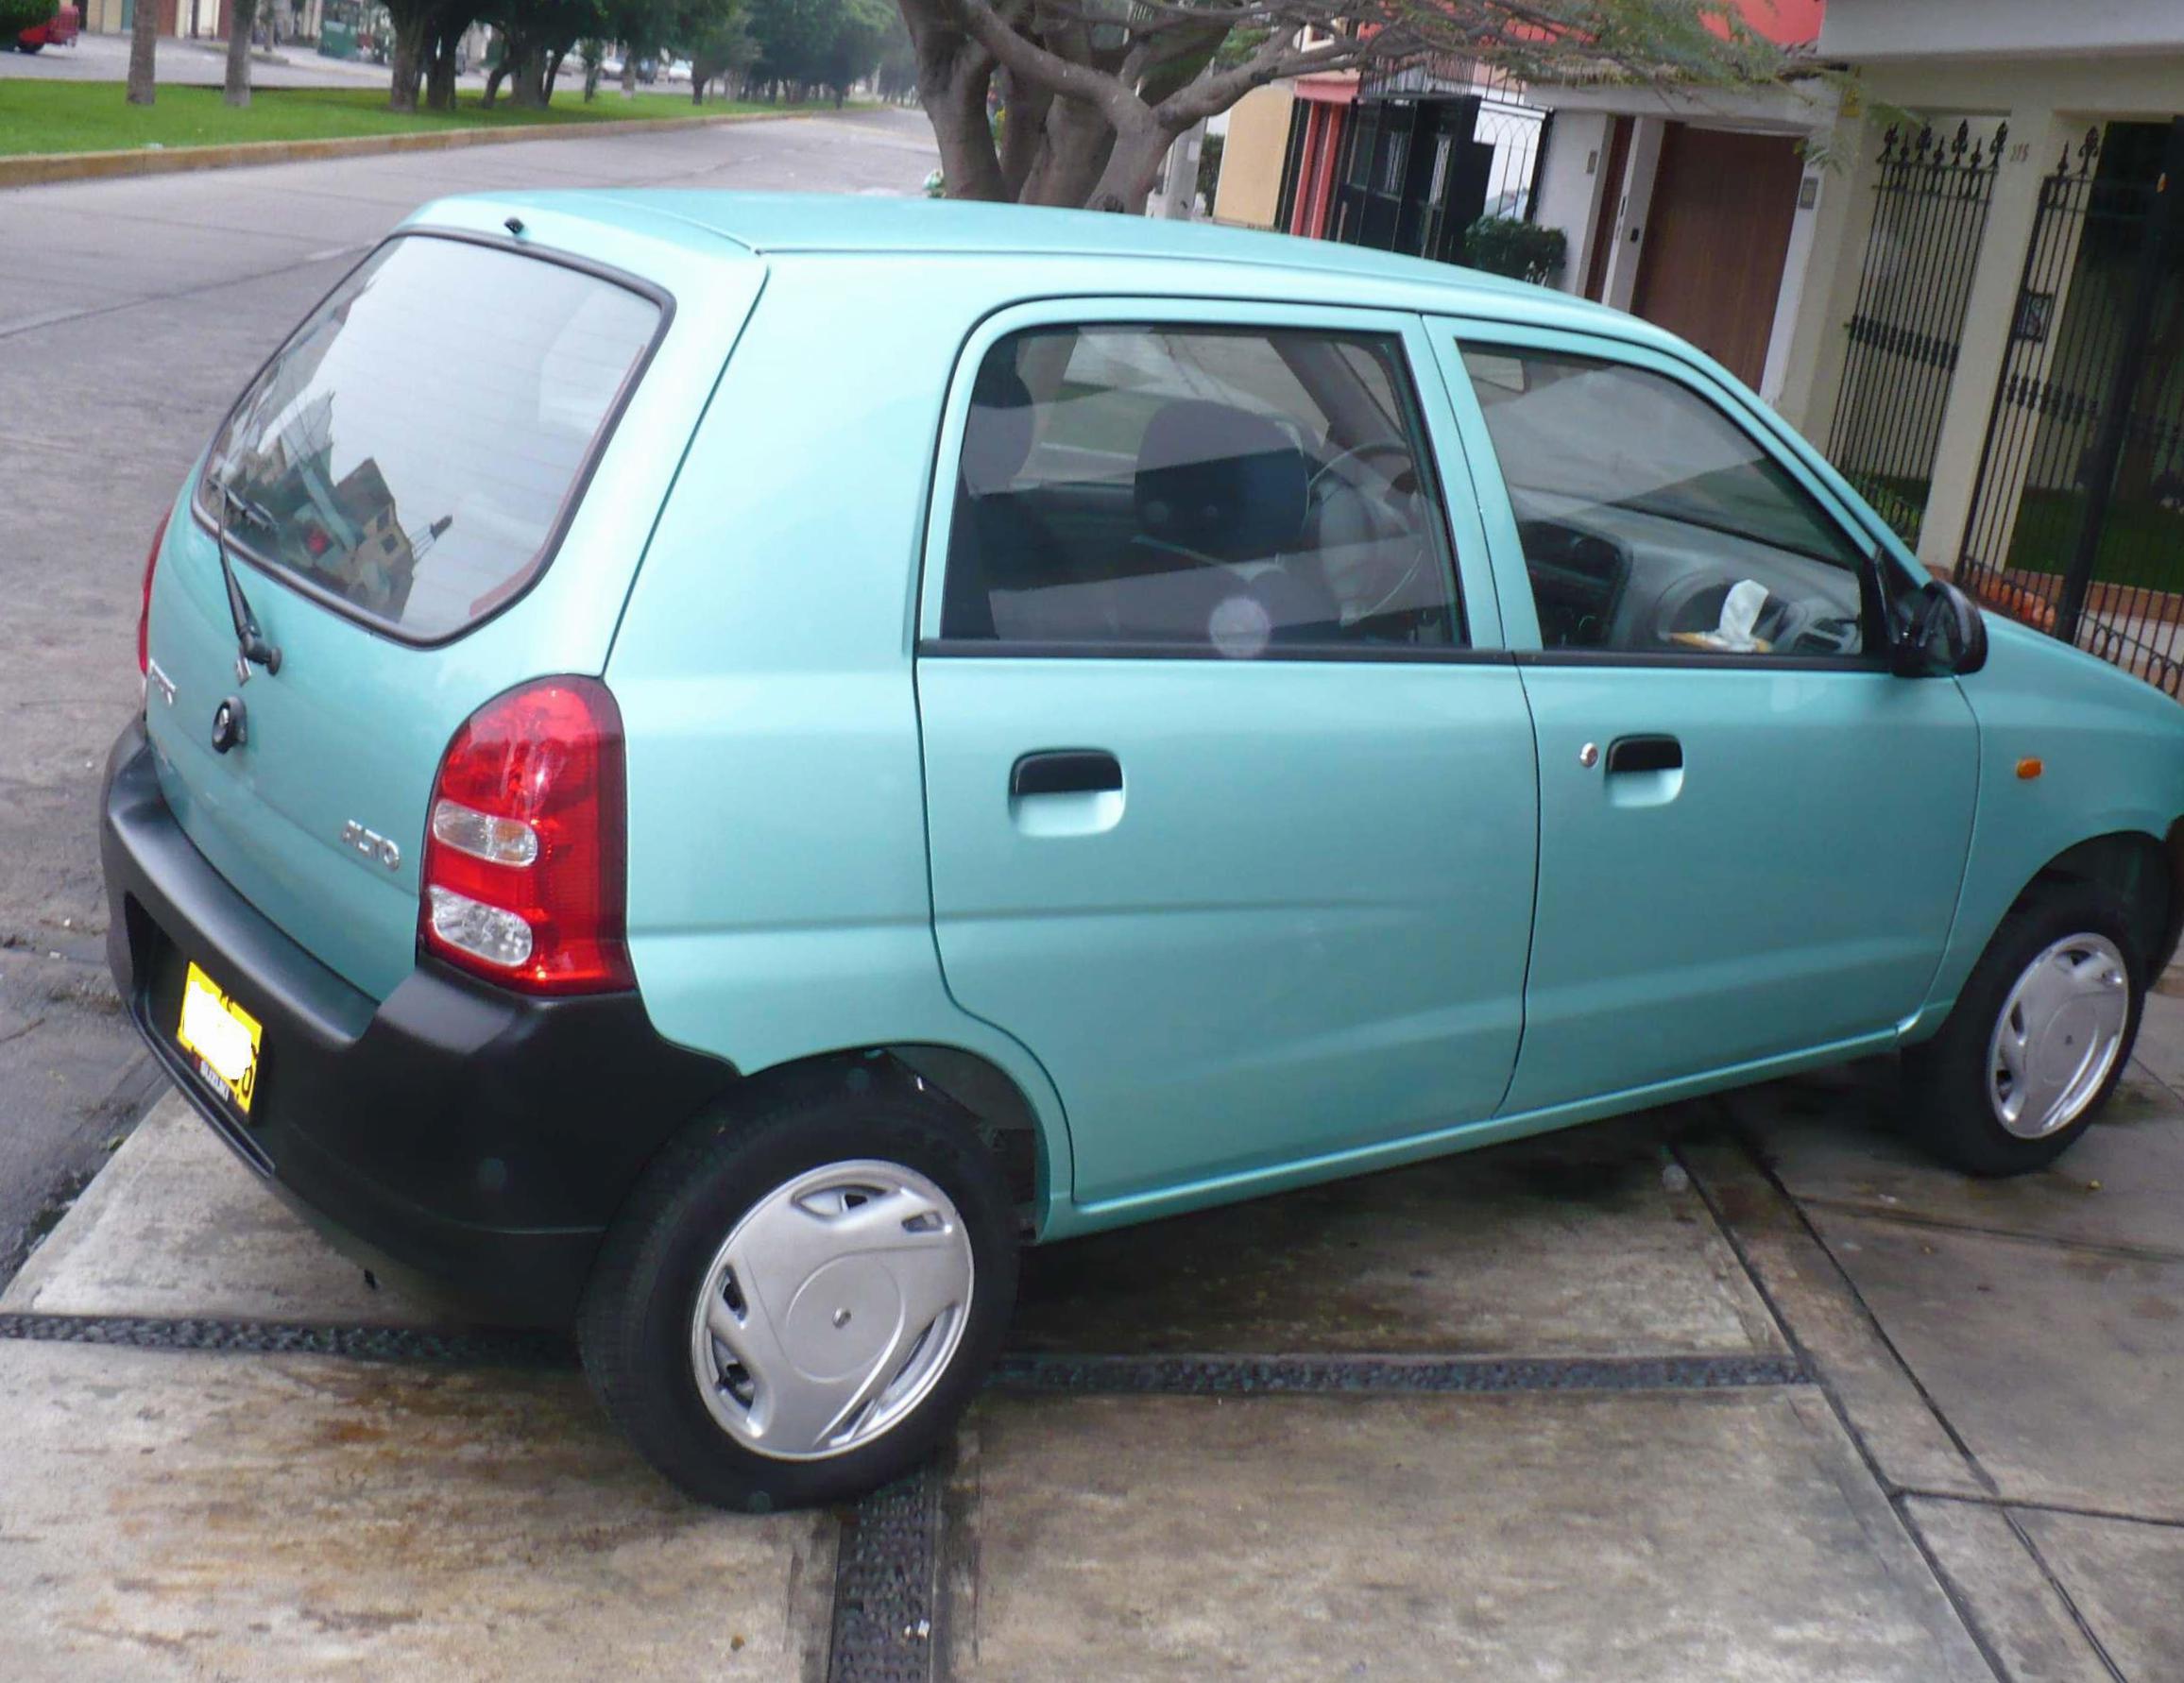 Alto Suzuki used hatchback